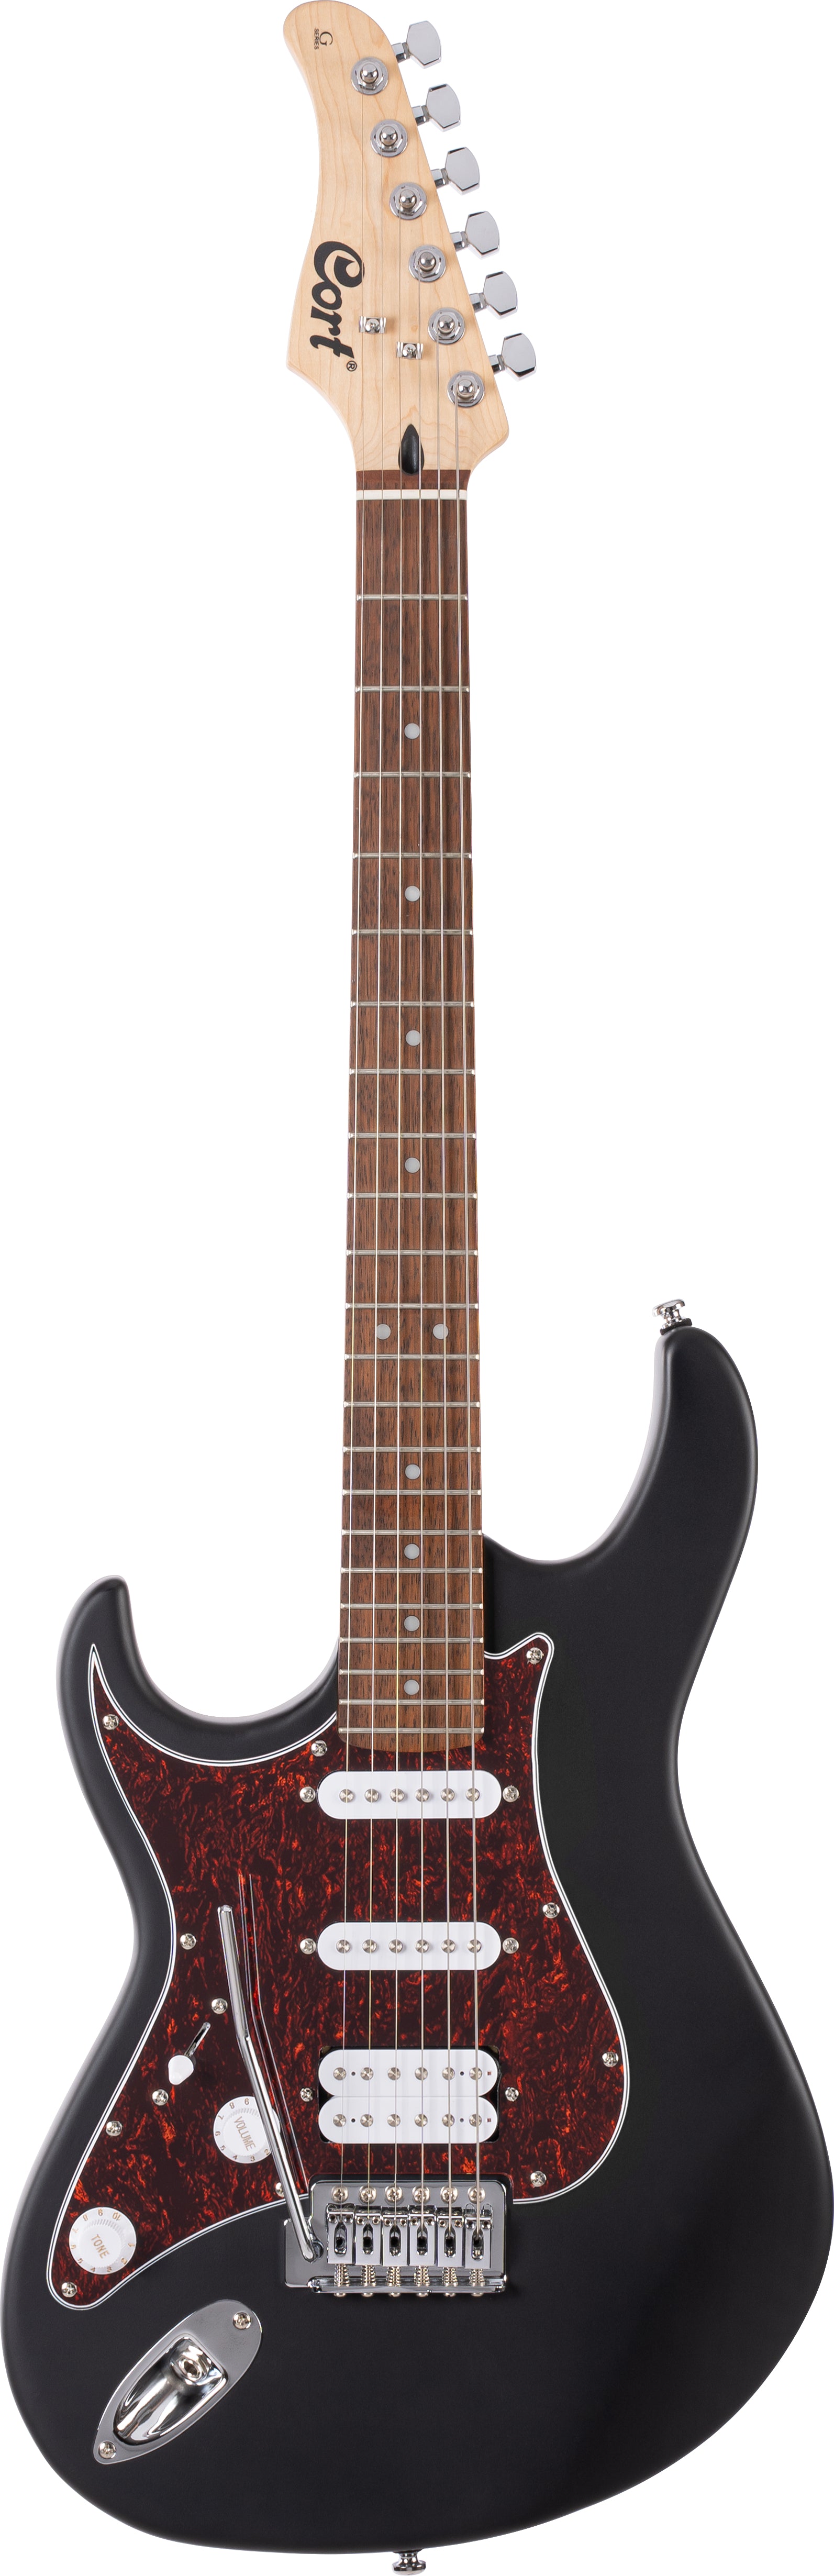 Cort G110 Left Handed Open Pore Black, Electric Guitar for sale at Richards Guitars.